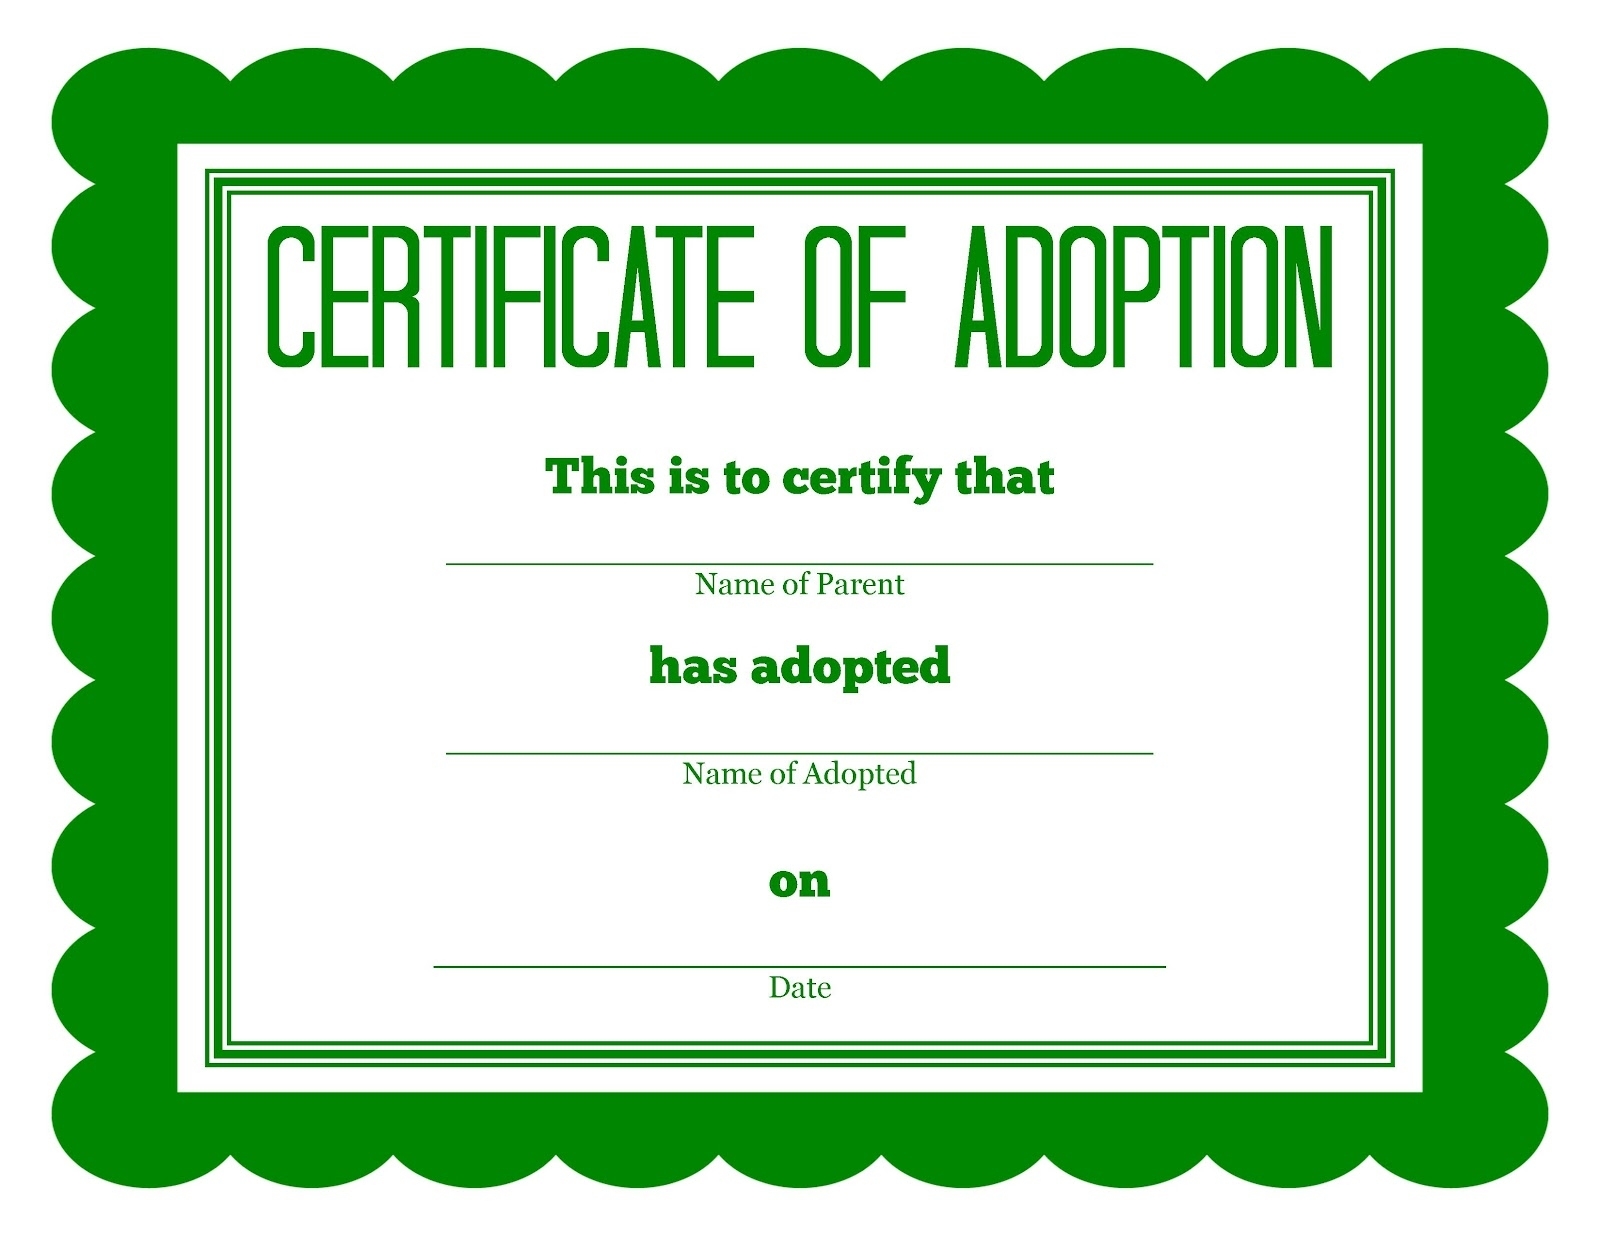 More Stuffed Animal Adoption Certificates Regarding Child Adoption Certificate Template